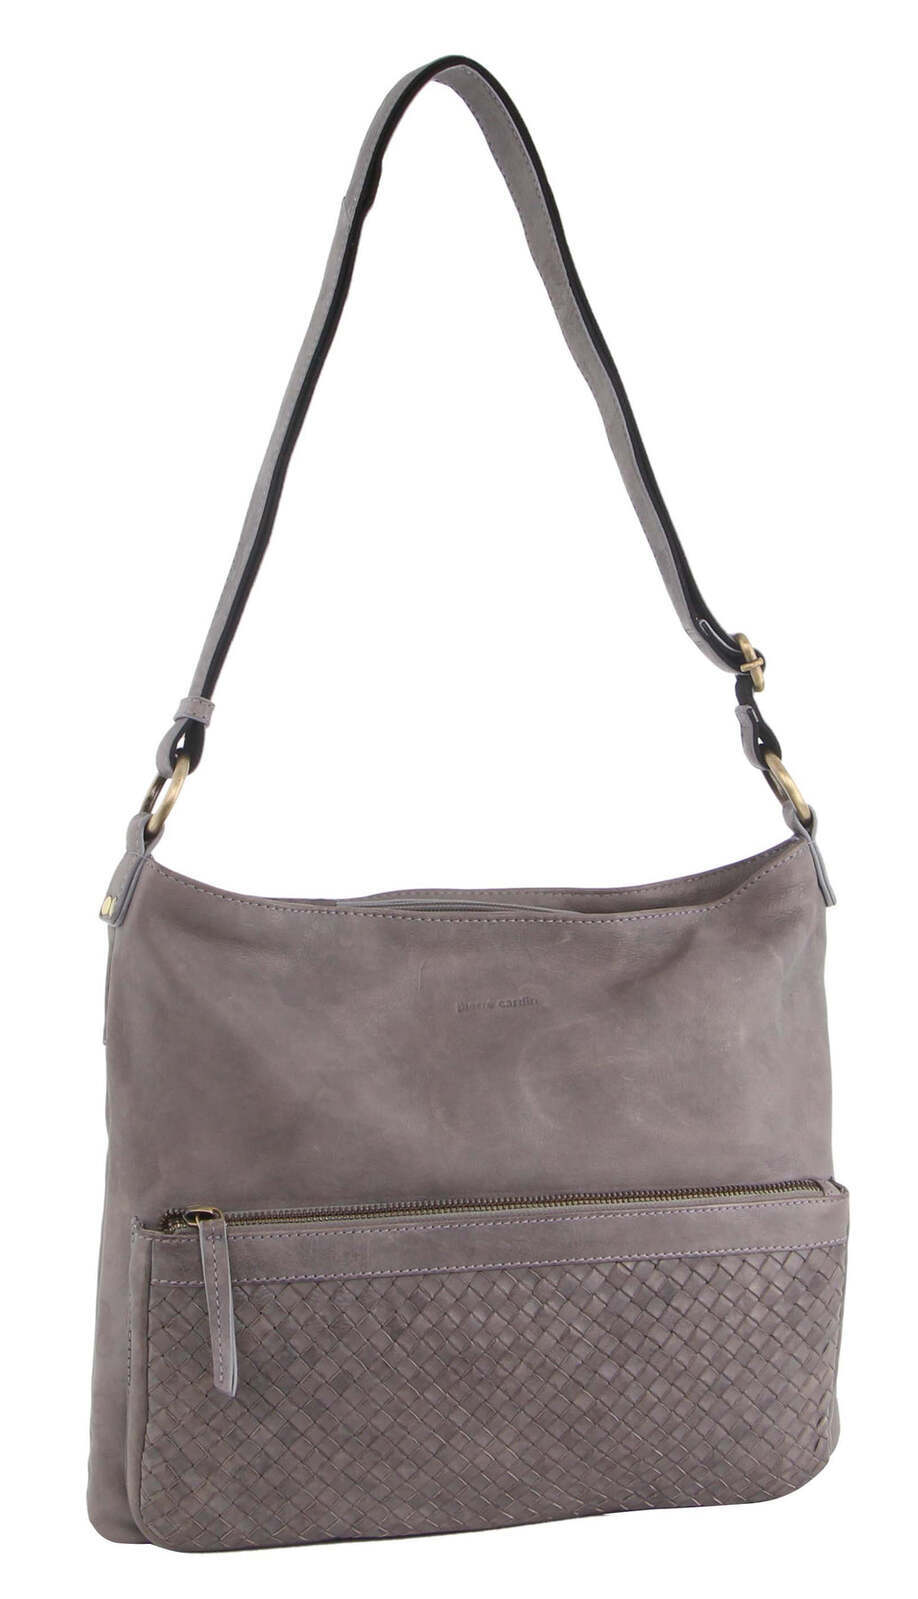 3Pc Set Pierre Cardin Womens Woven Leather Backpack + Cross-Body Bags - Sky Blue